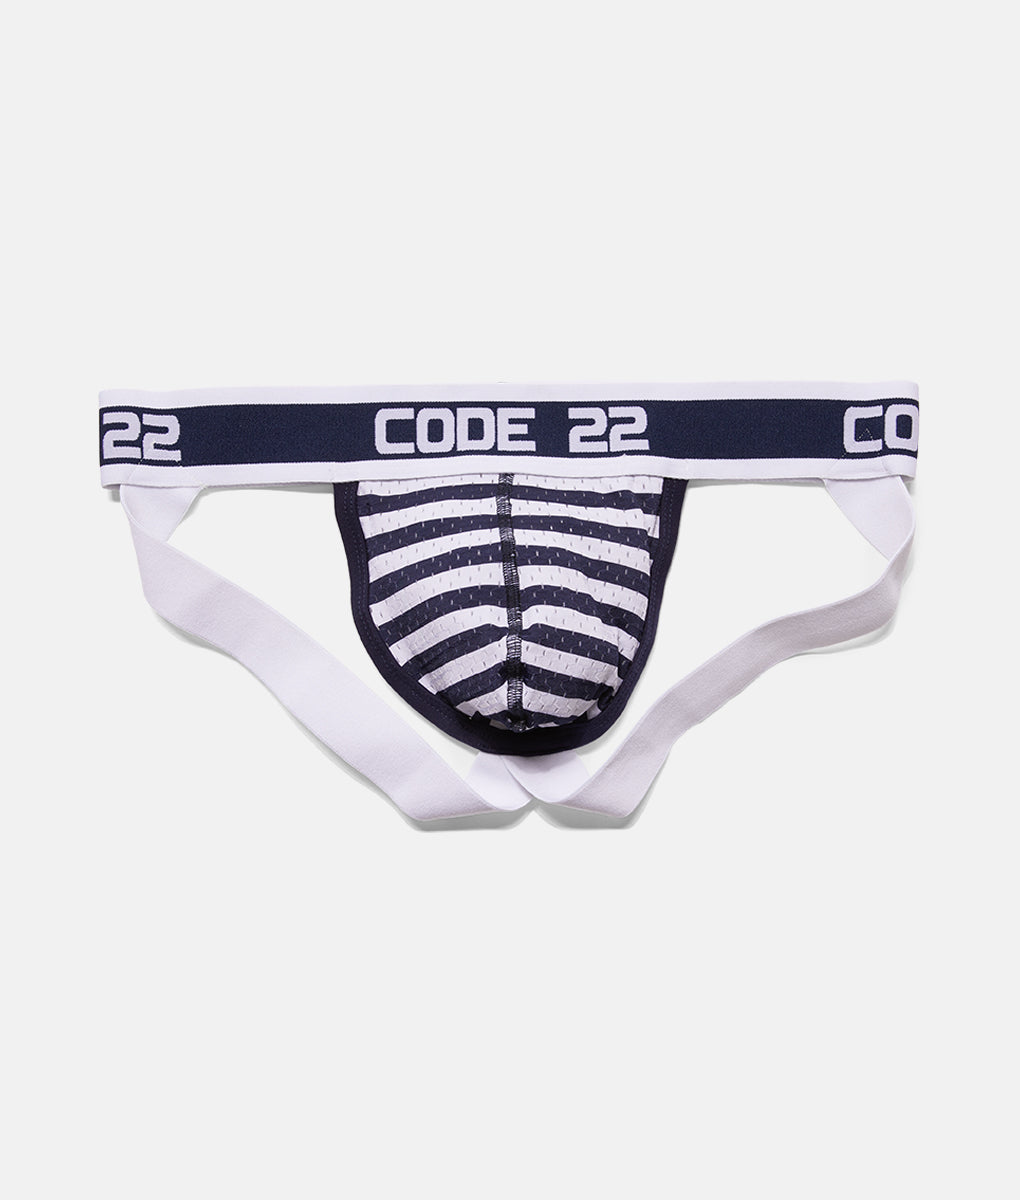 CODE 22 Palm Tree Jockstrap - Underwear Expert